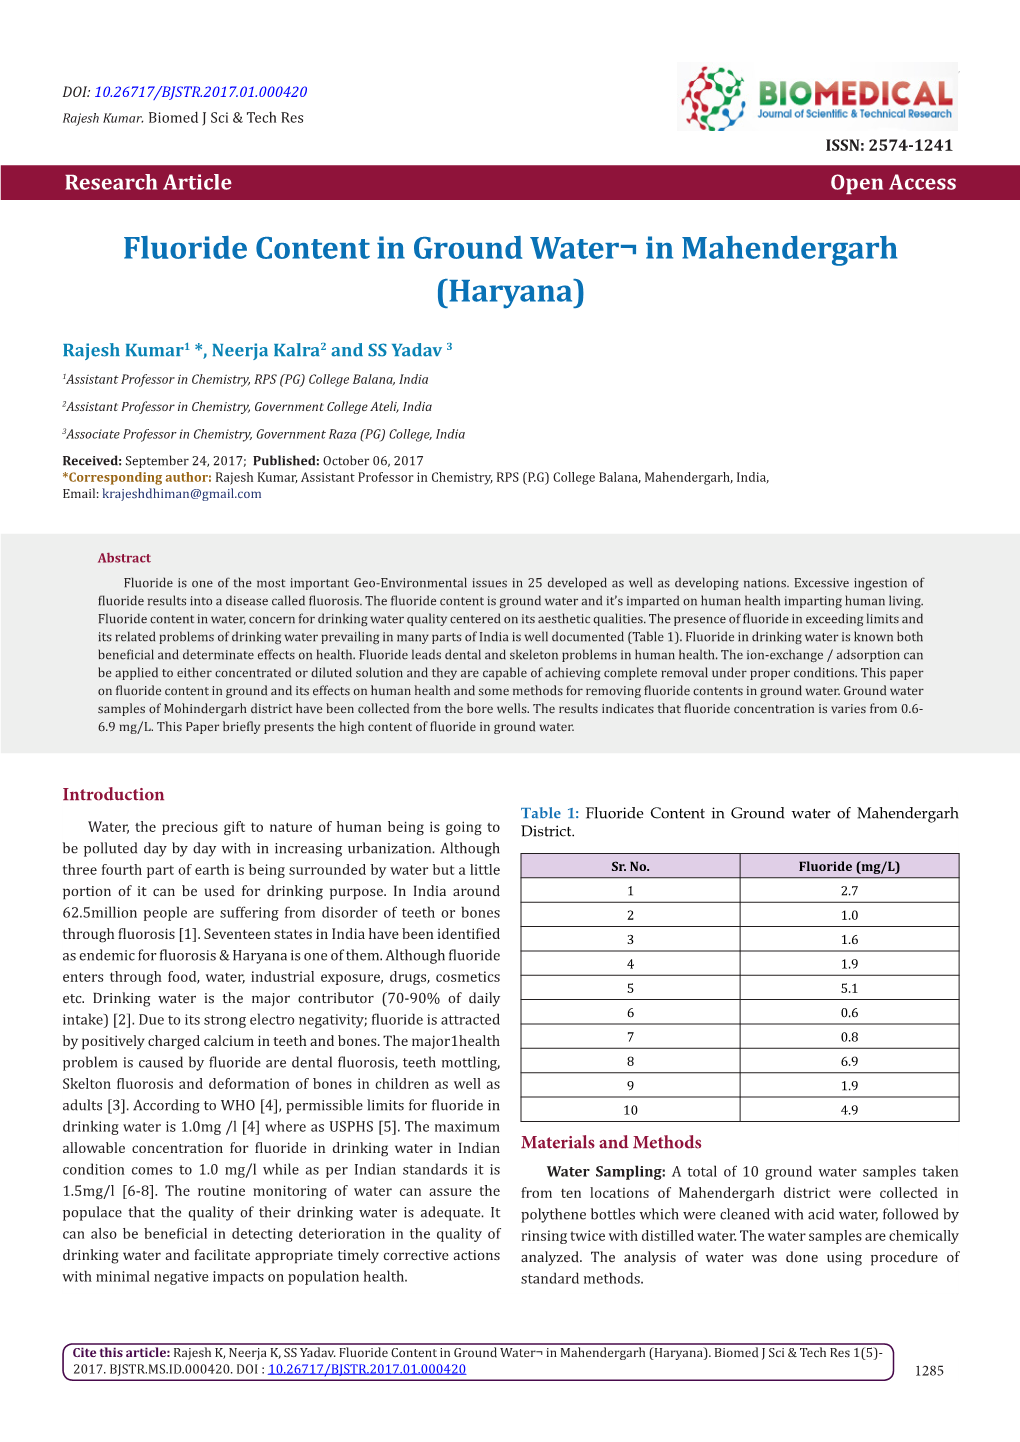 Fluoride Content in Ground Water¬ in Mahendergarh (Haryana)